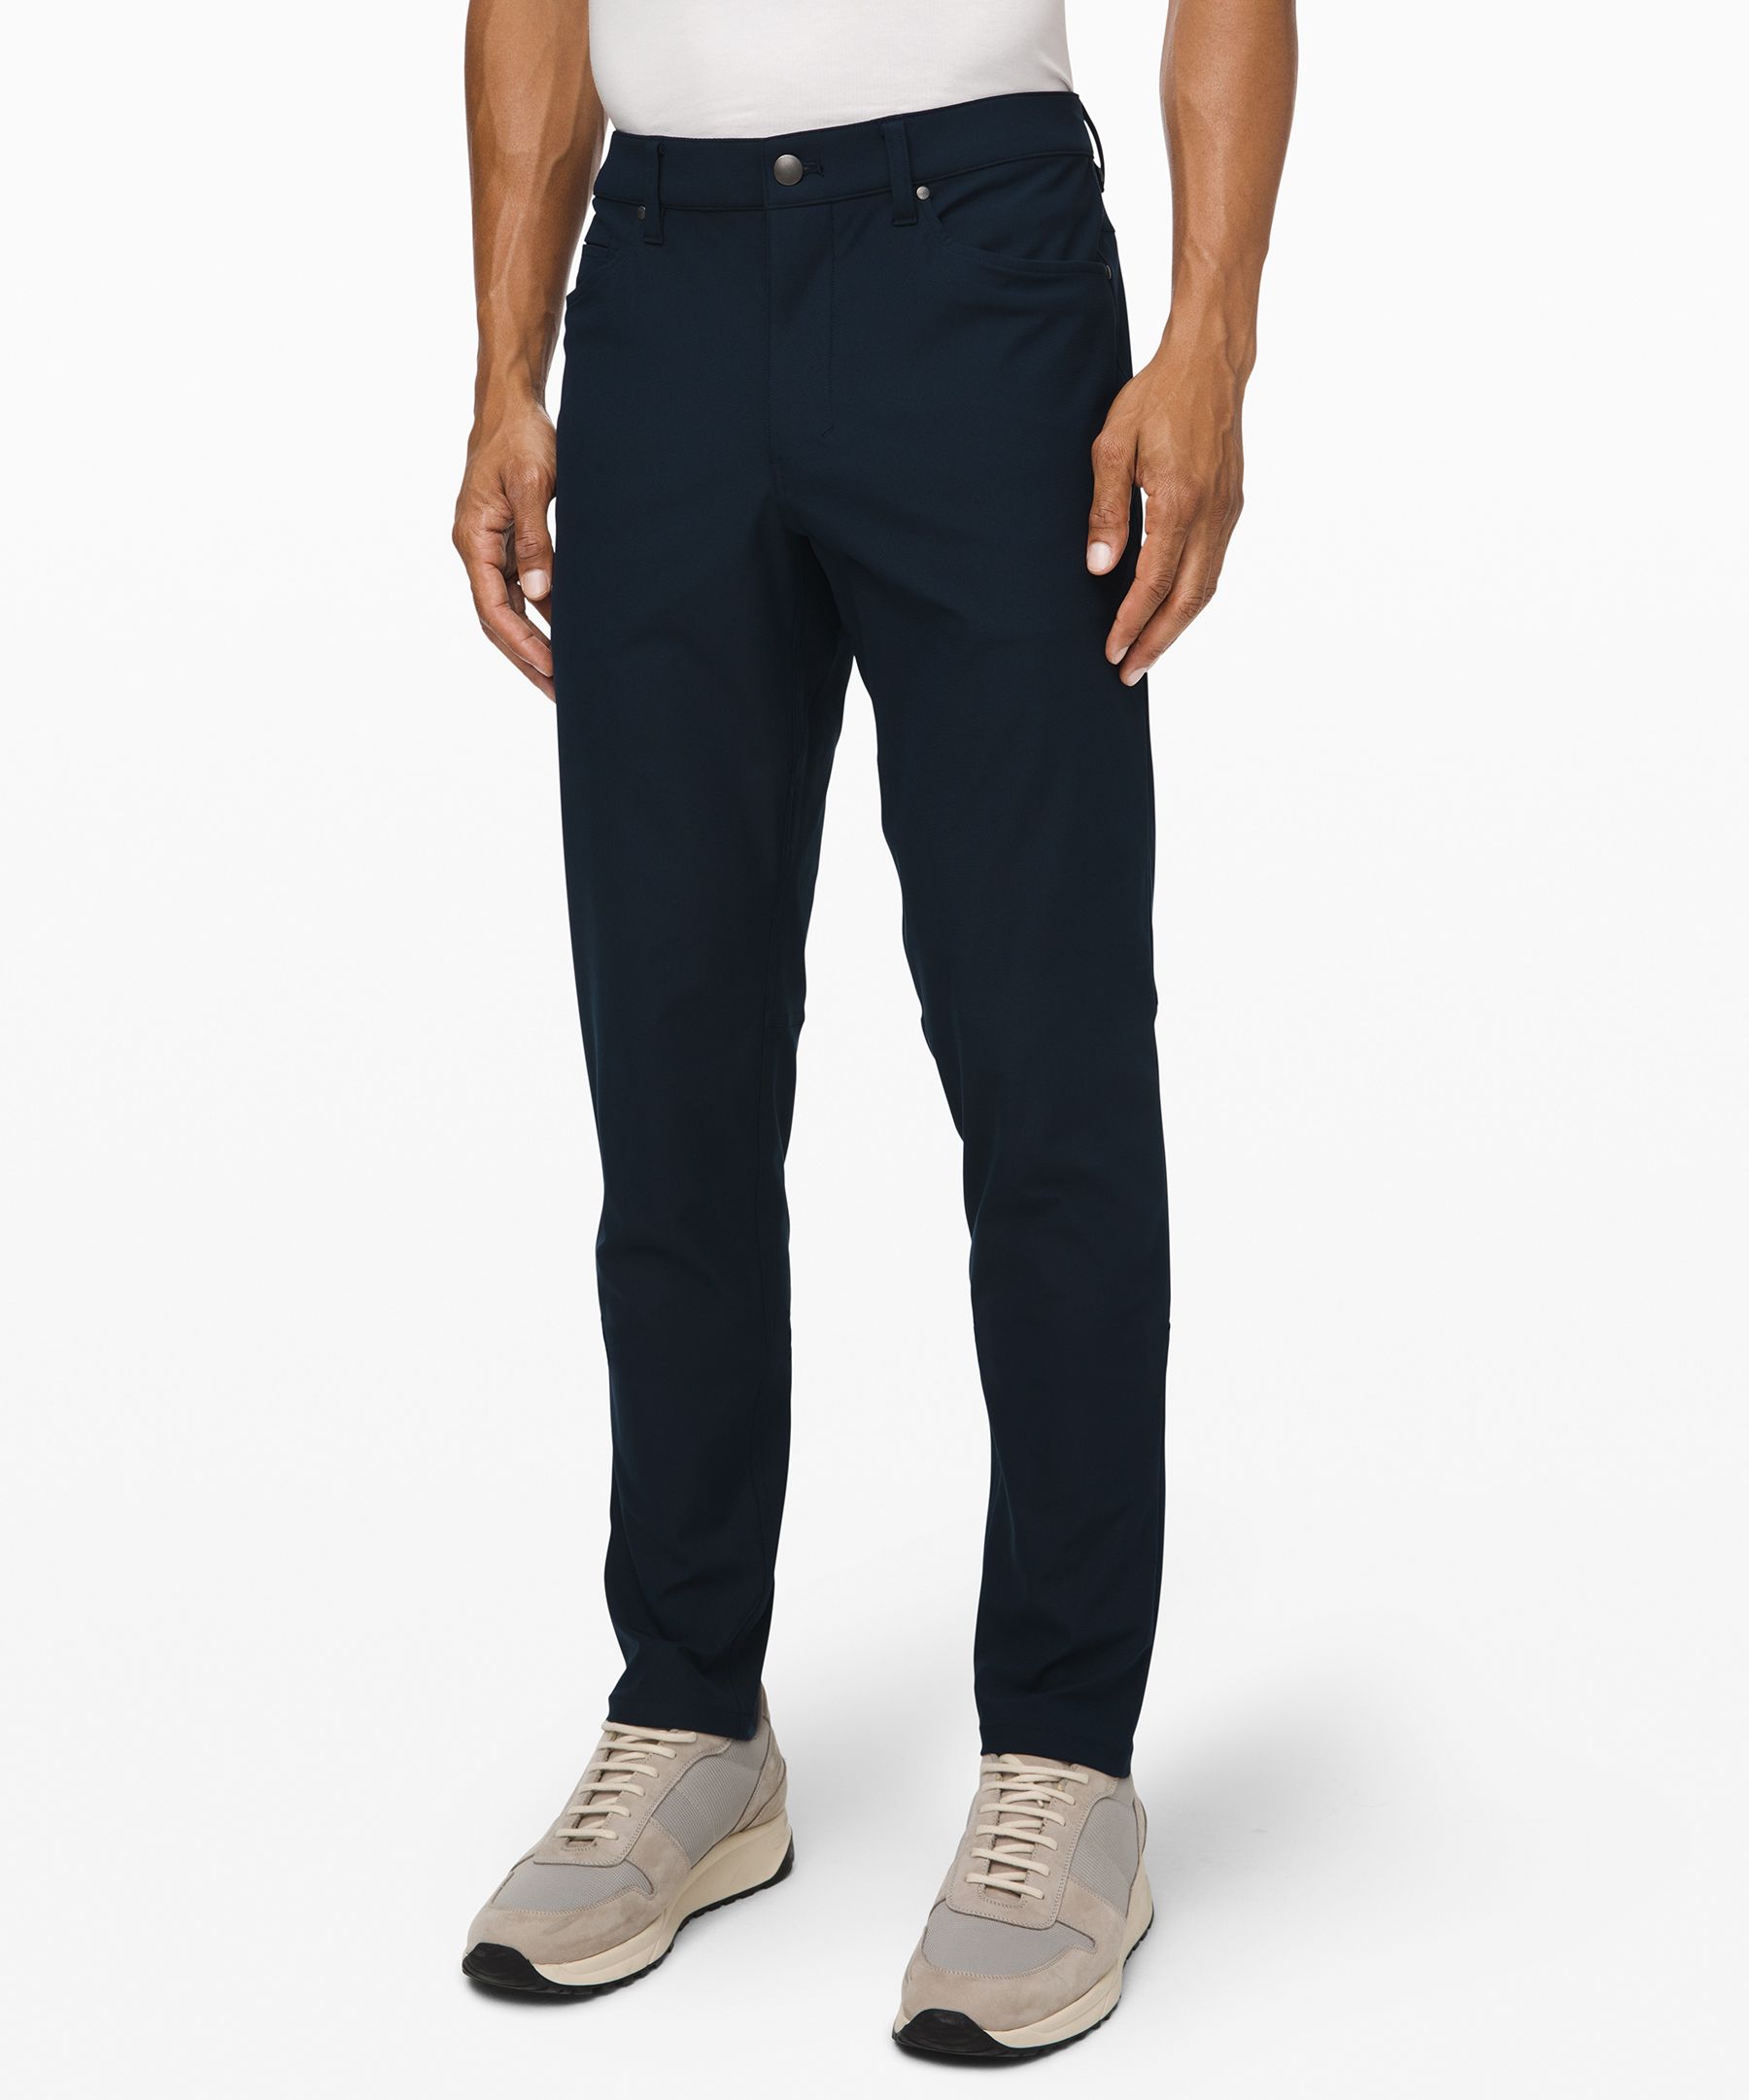 Lululemon ABC Slim-Fit 5 Pocket Pants Warpstreme Men's Size 35